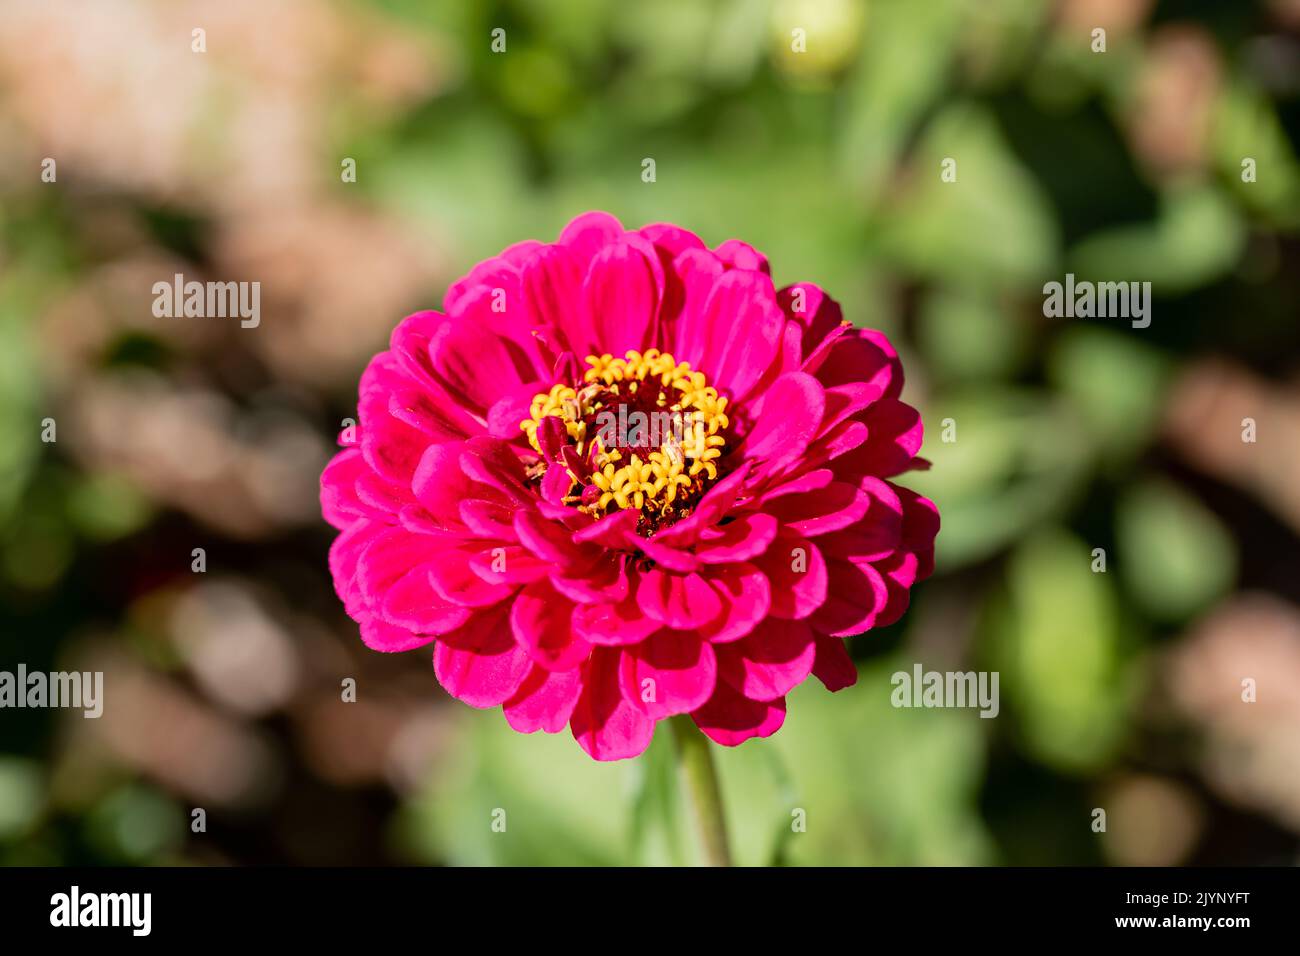 Rosa flor de Zinnia primer plano Foto de stock